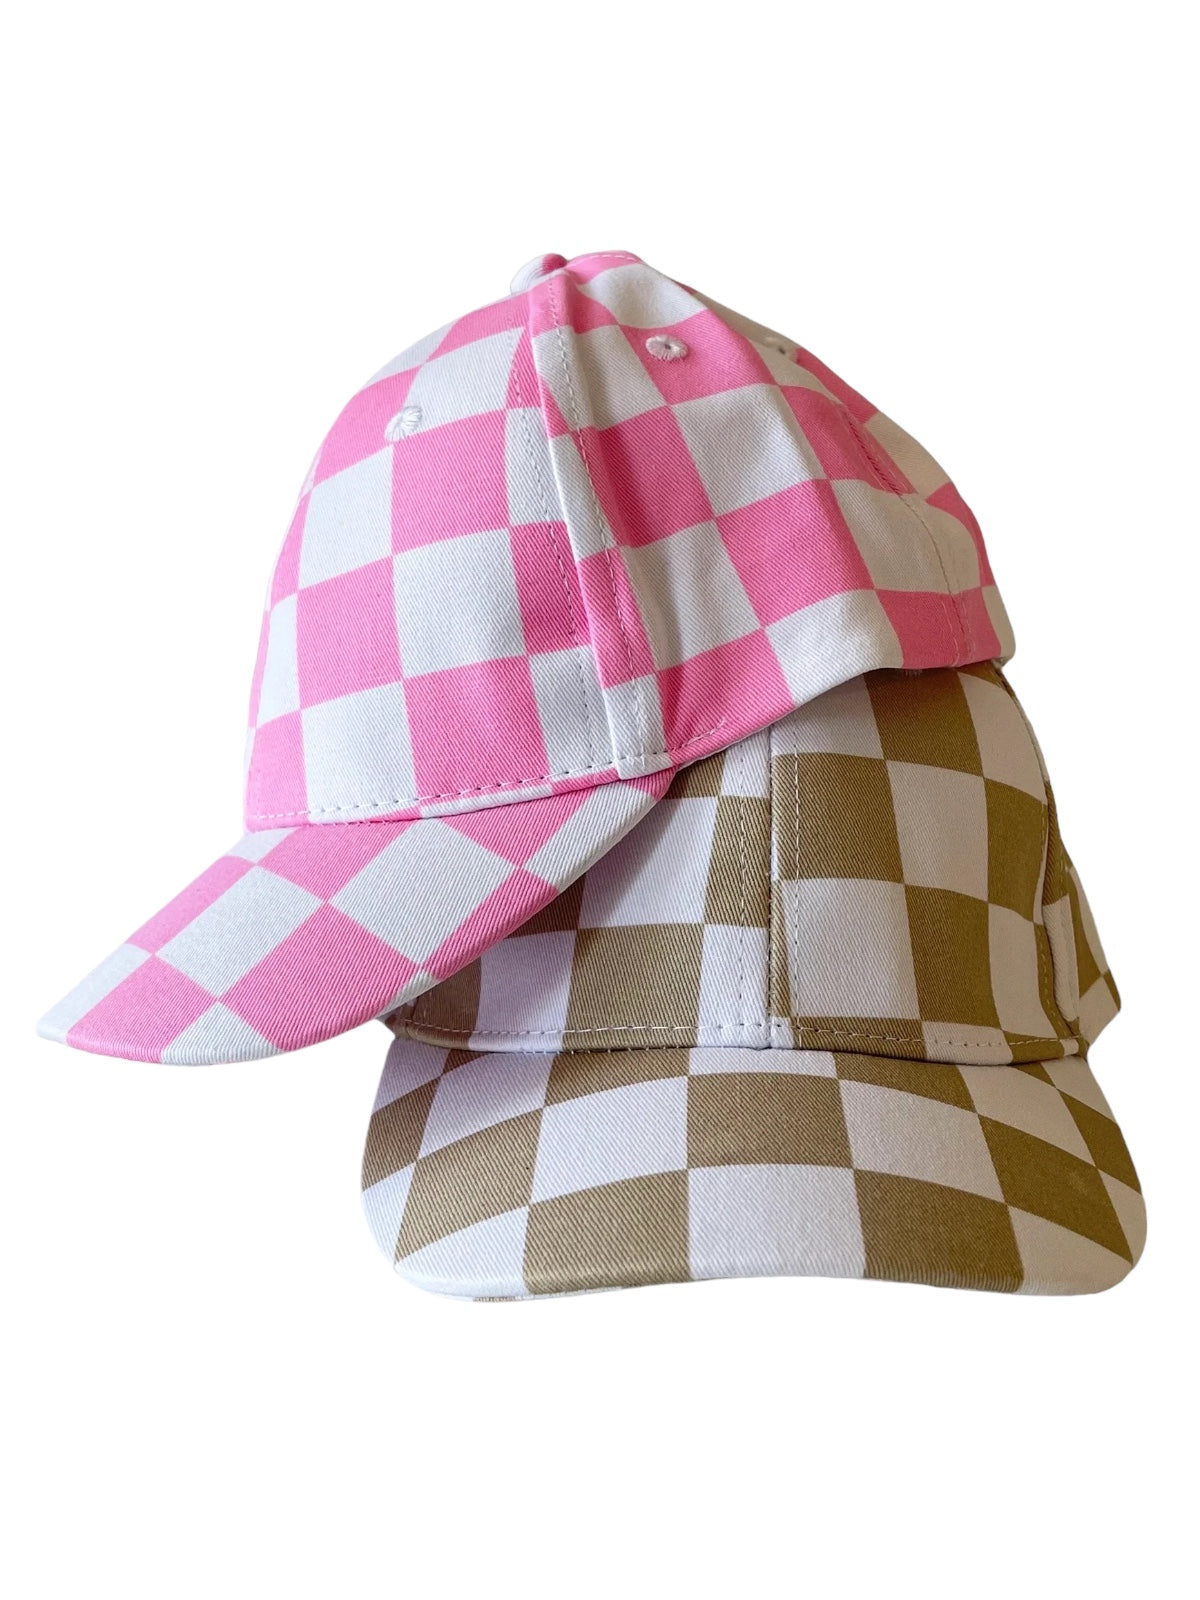 Kids Baseball Hat, Pink Checkerboard